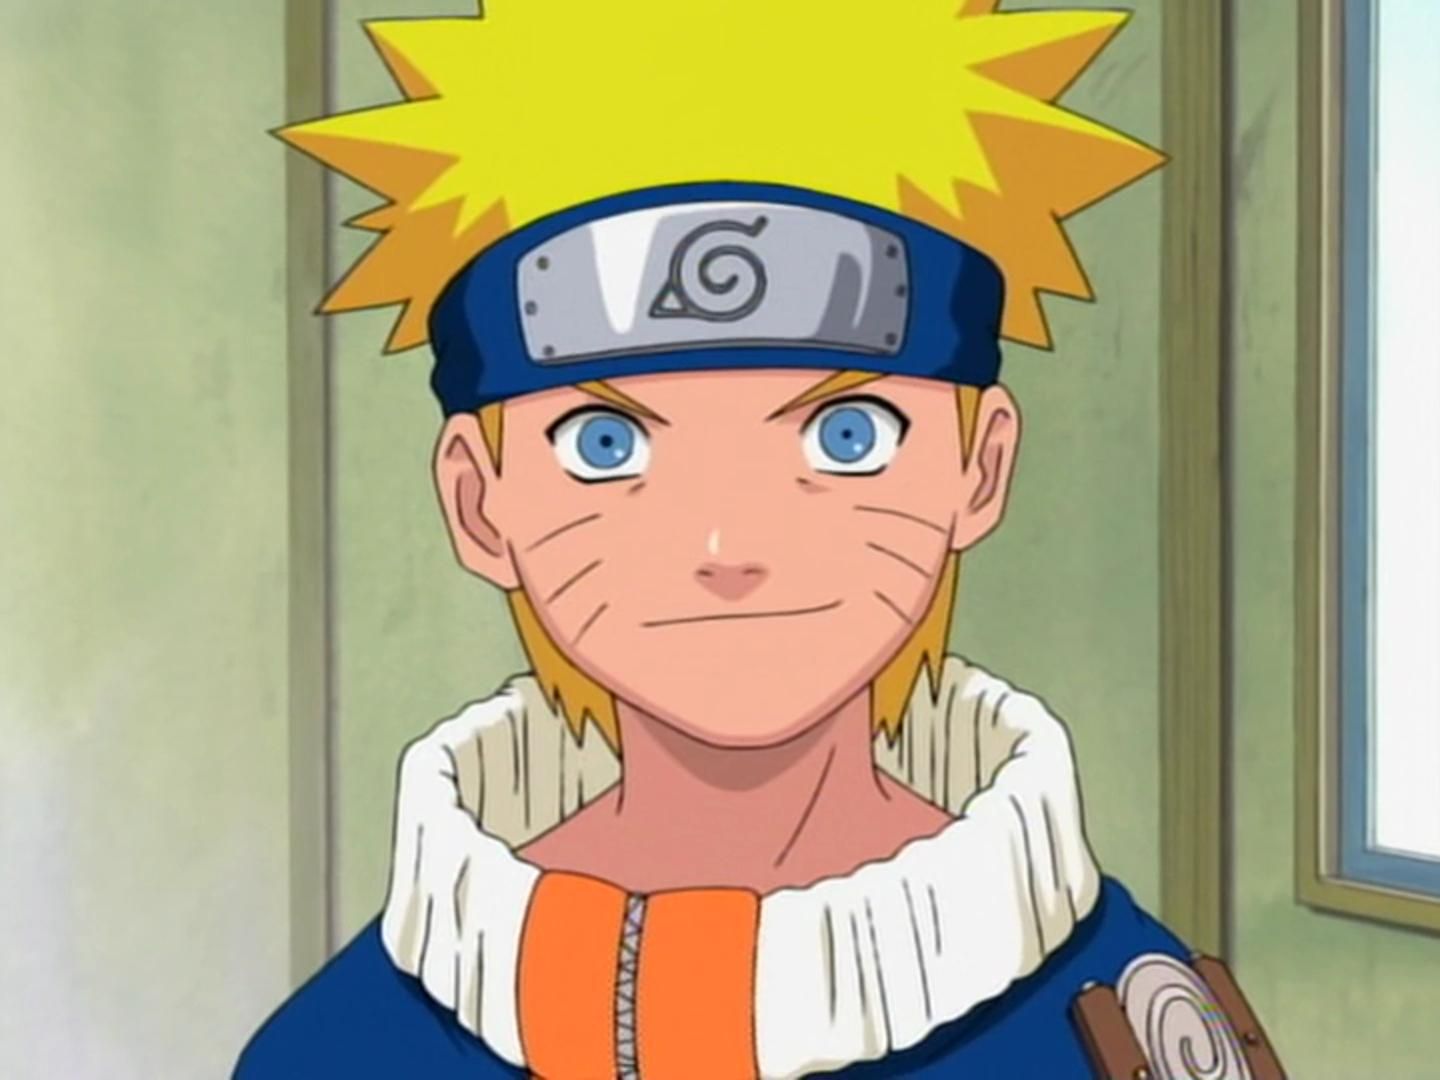 1° Episódio - Naruto Uzumaki chegando - ( Naruto Clássico )